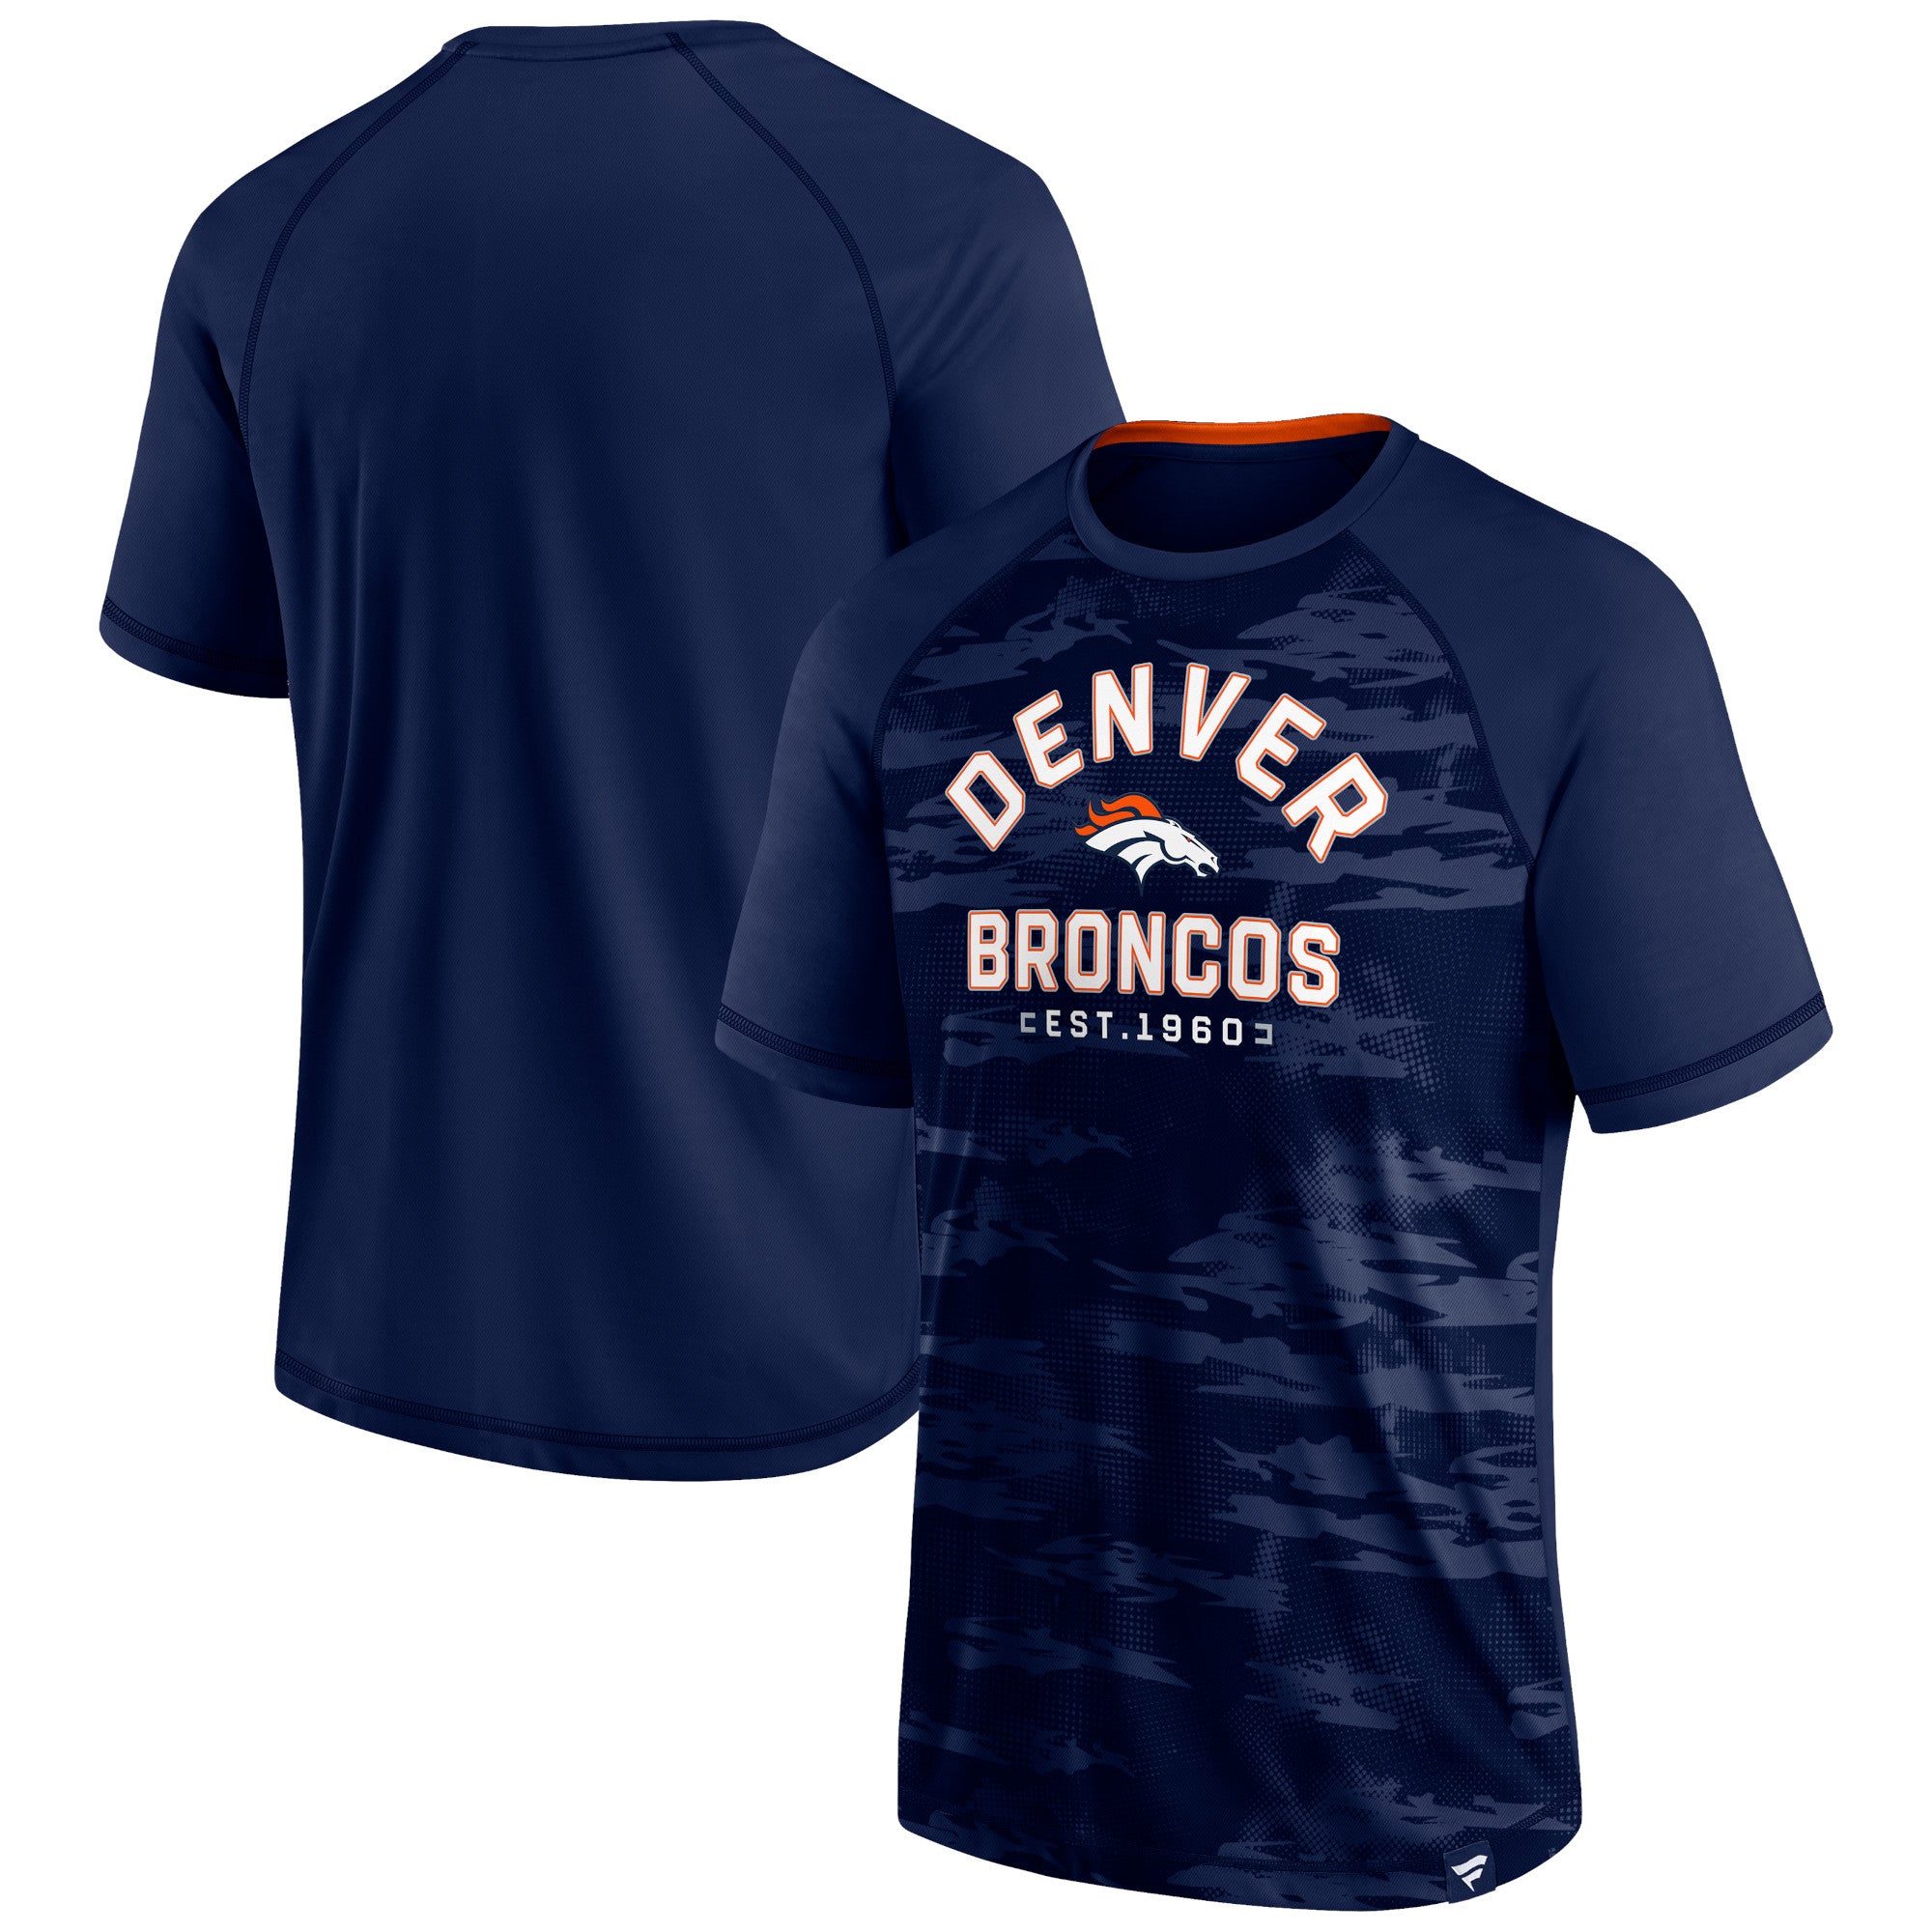 Fanatics Broncos Hail Mary Raglan T-Shirt - Men's